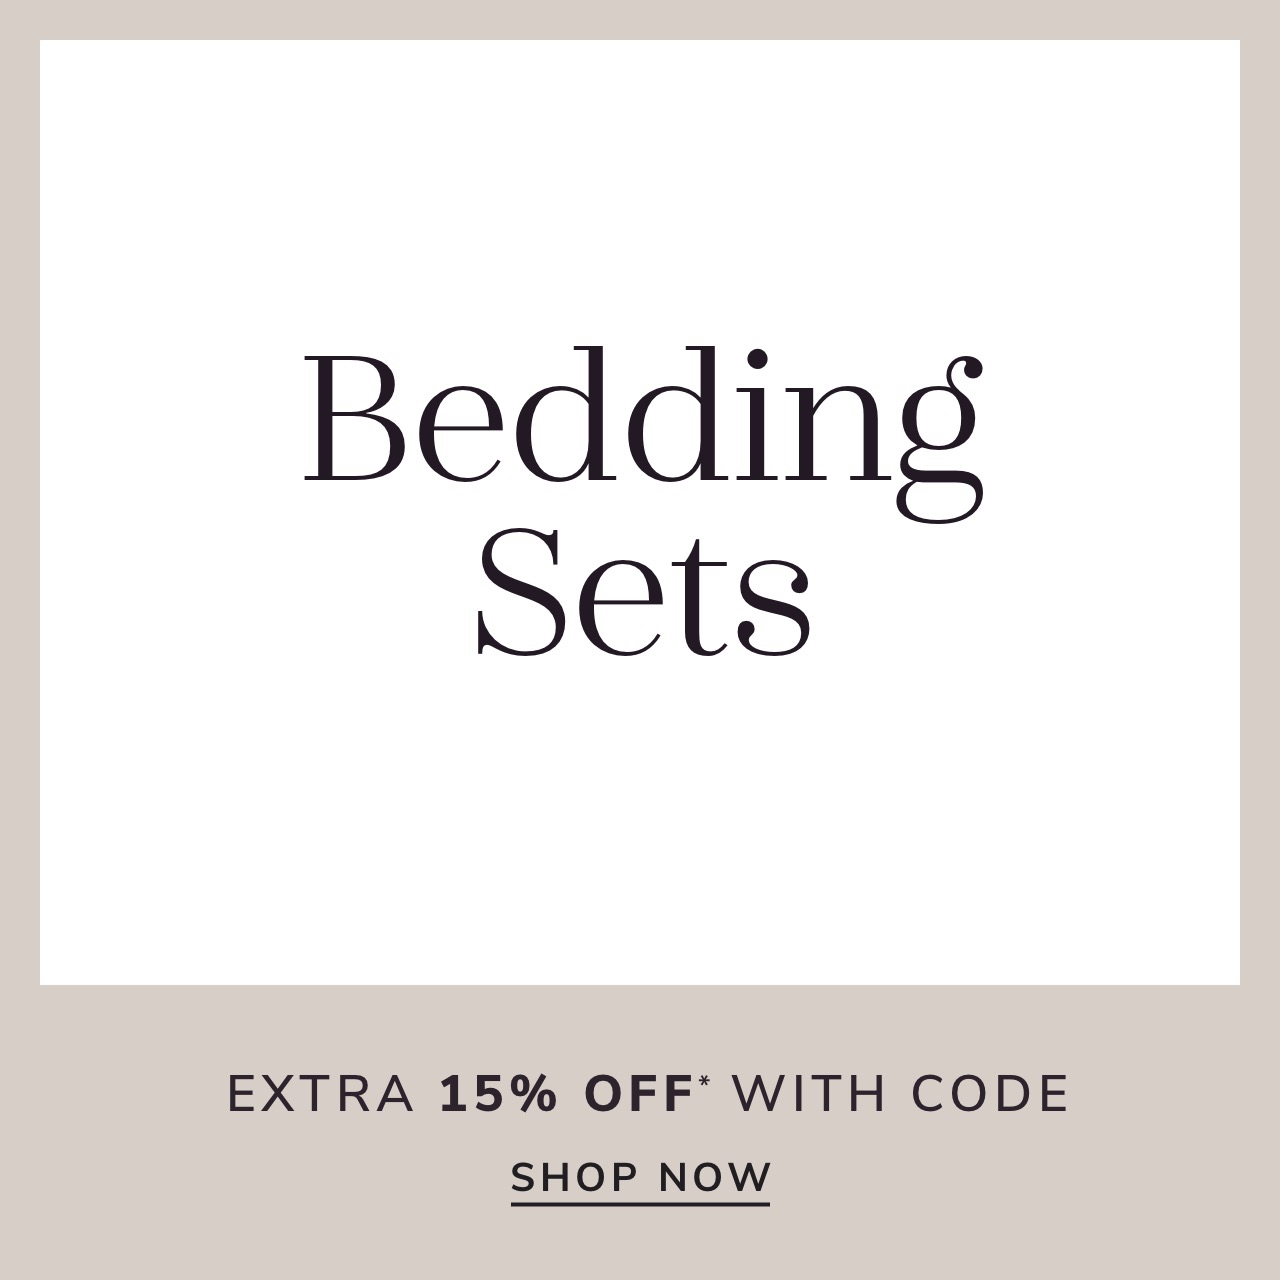 Bedding Set Sale